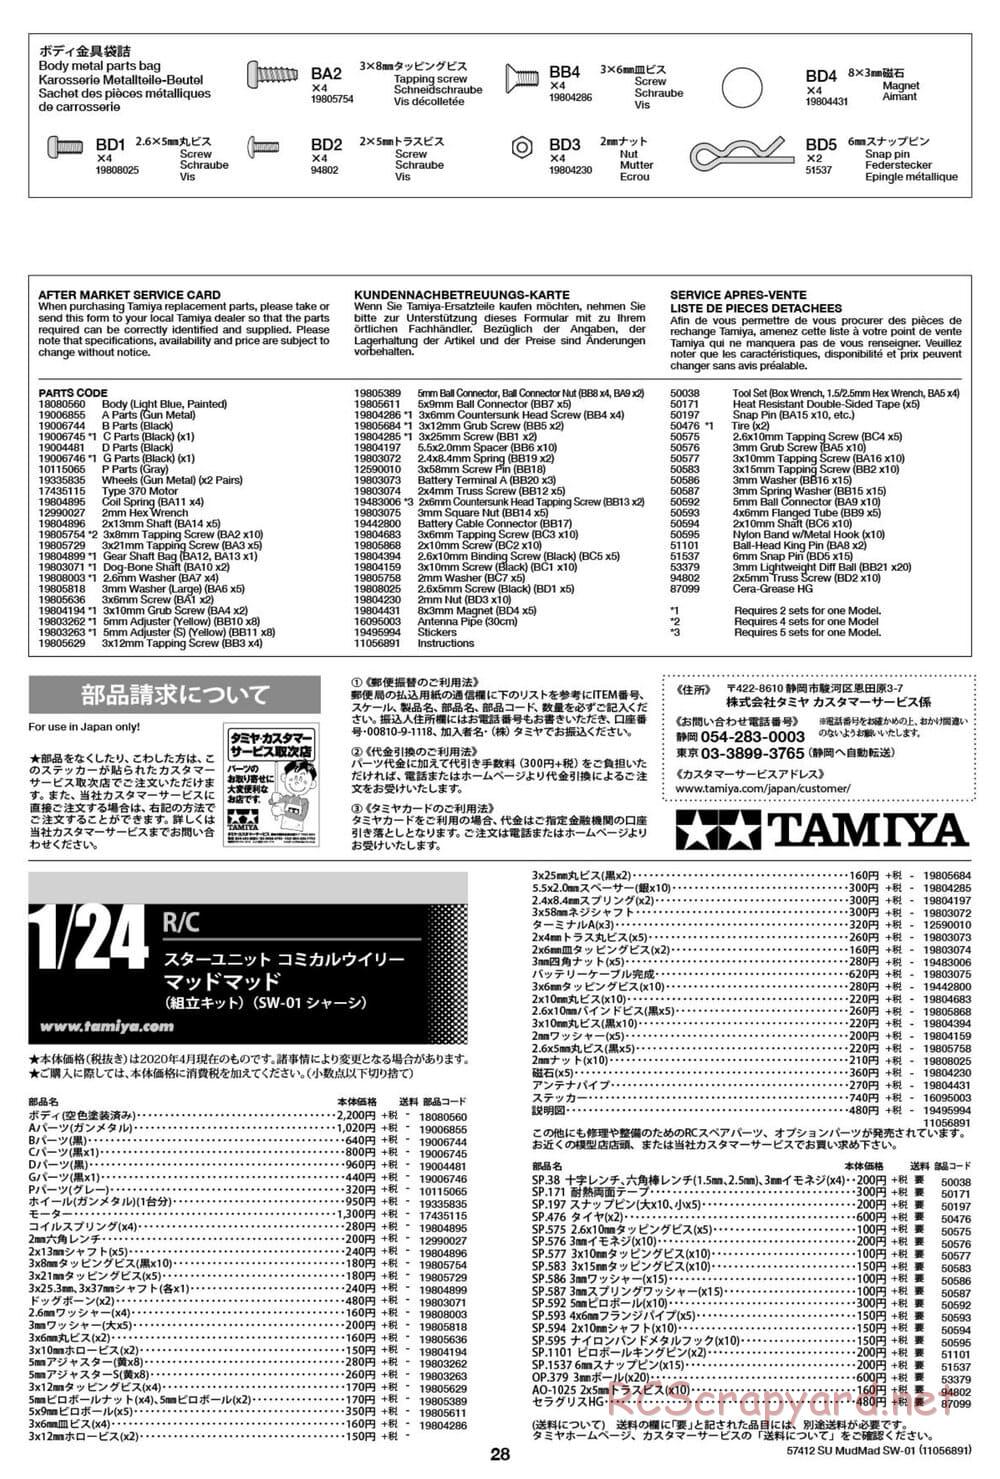 Tamiya - MudMad - SW-01 Chassis - Manual - Page 28